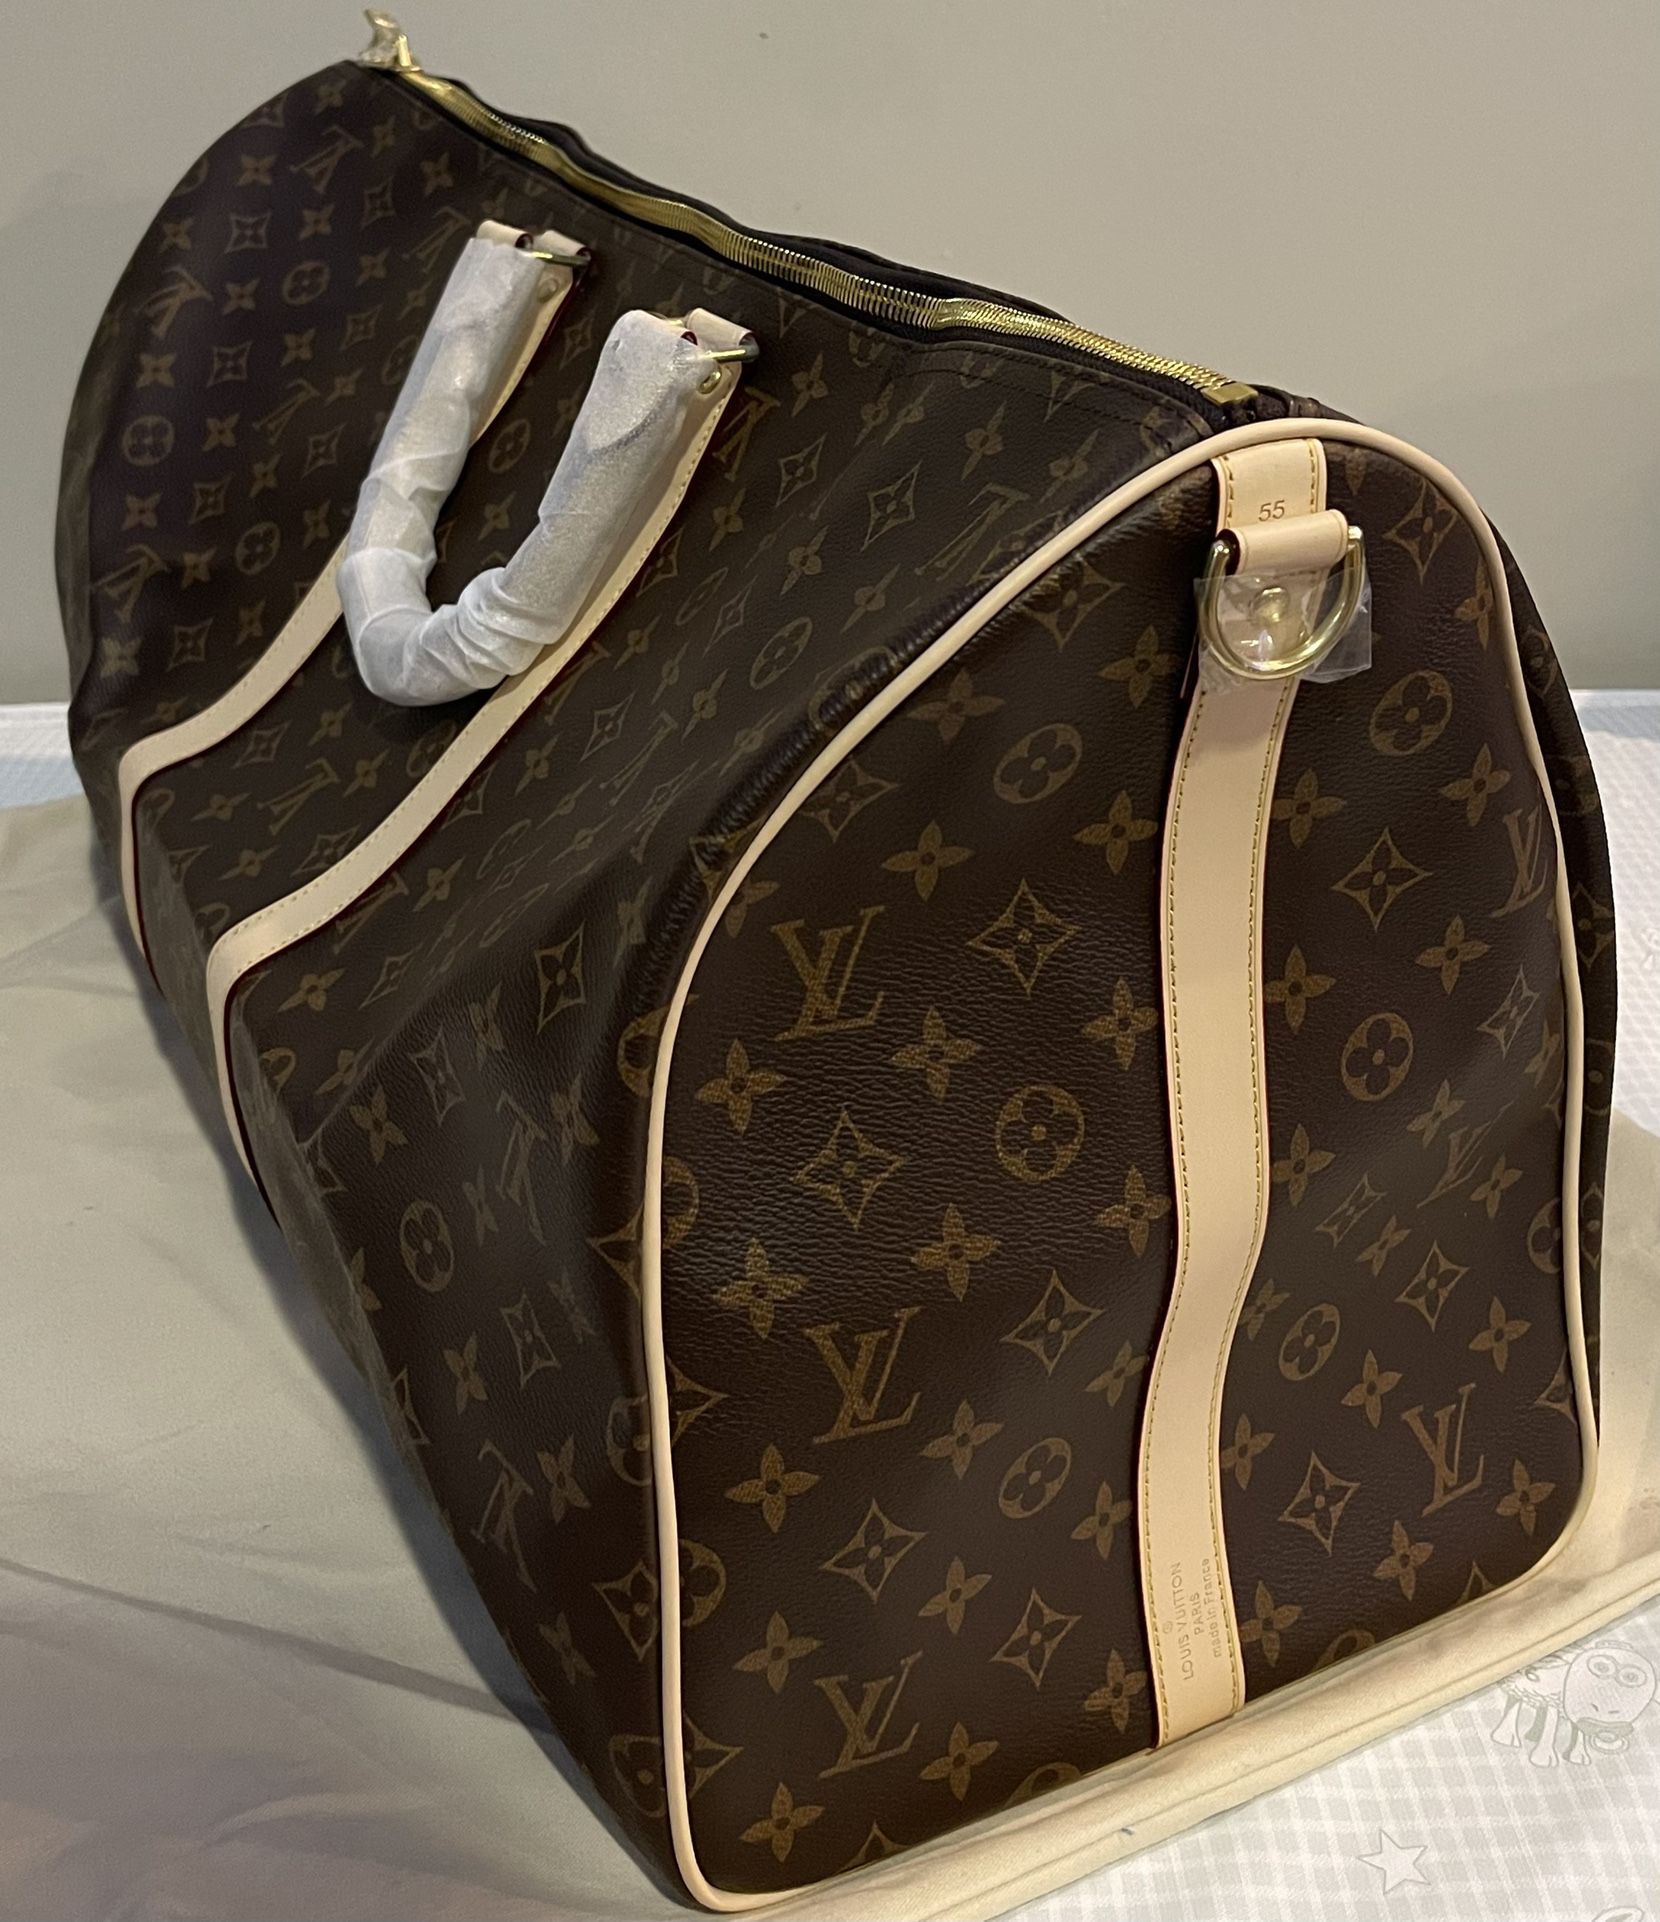 Louie Vuitton BANDOULIÈRE Duffle Bag for Sale in Atlanta, GA